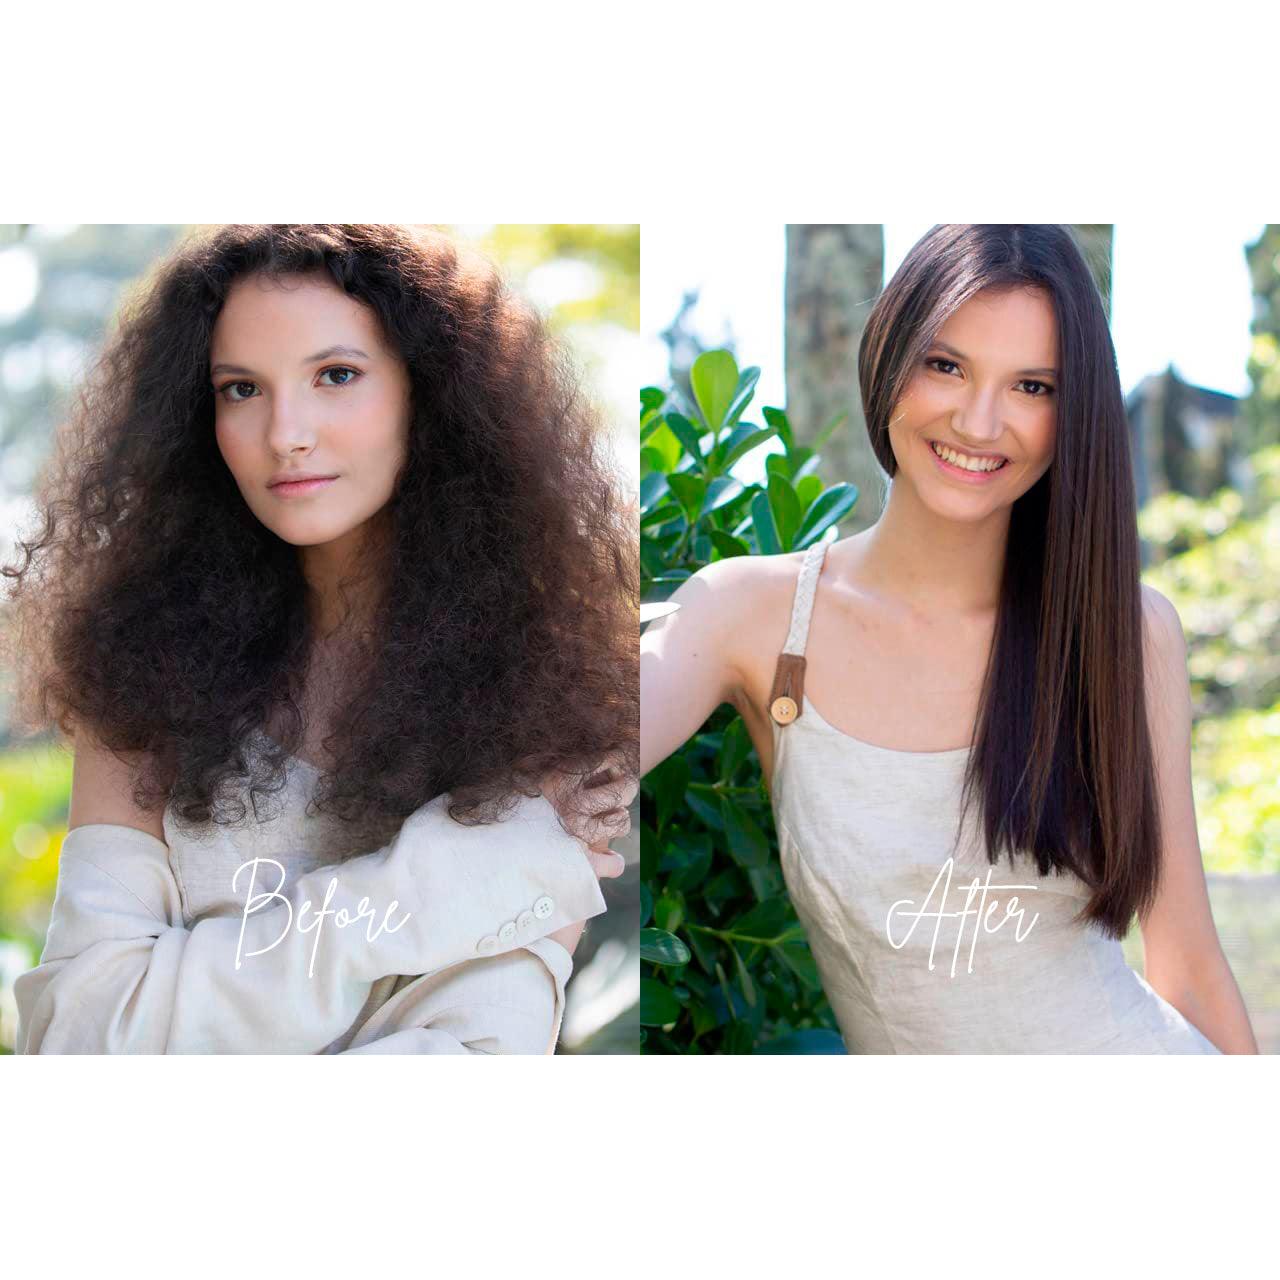 Lana Brasiles - Mini Forest Protein Smoothing Hair Treatment - All Hair Types -100 ml / 3.38 fl.oz. - BUY BRAZIL STORE